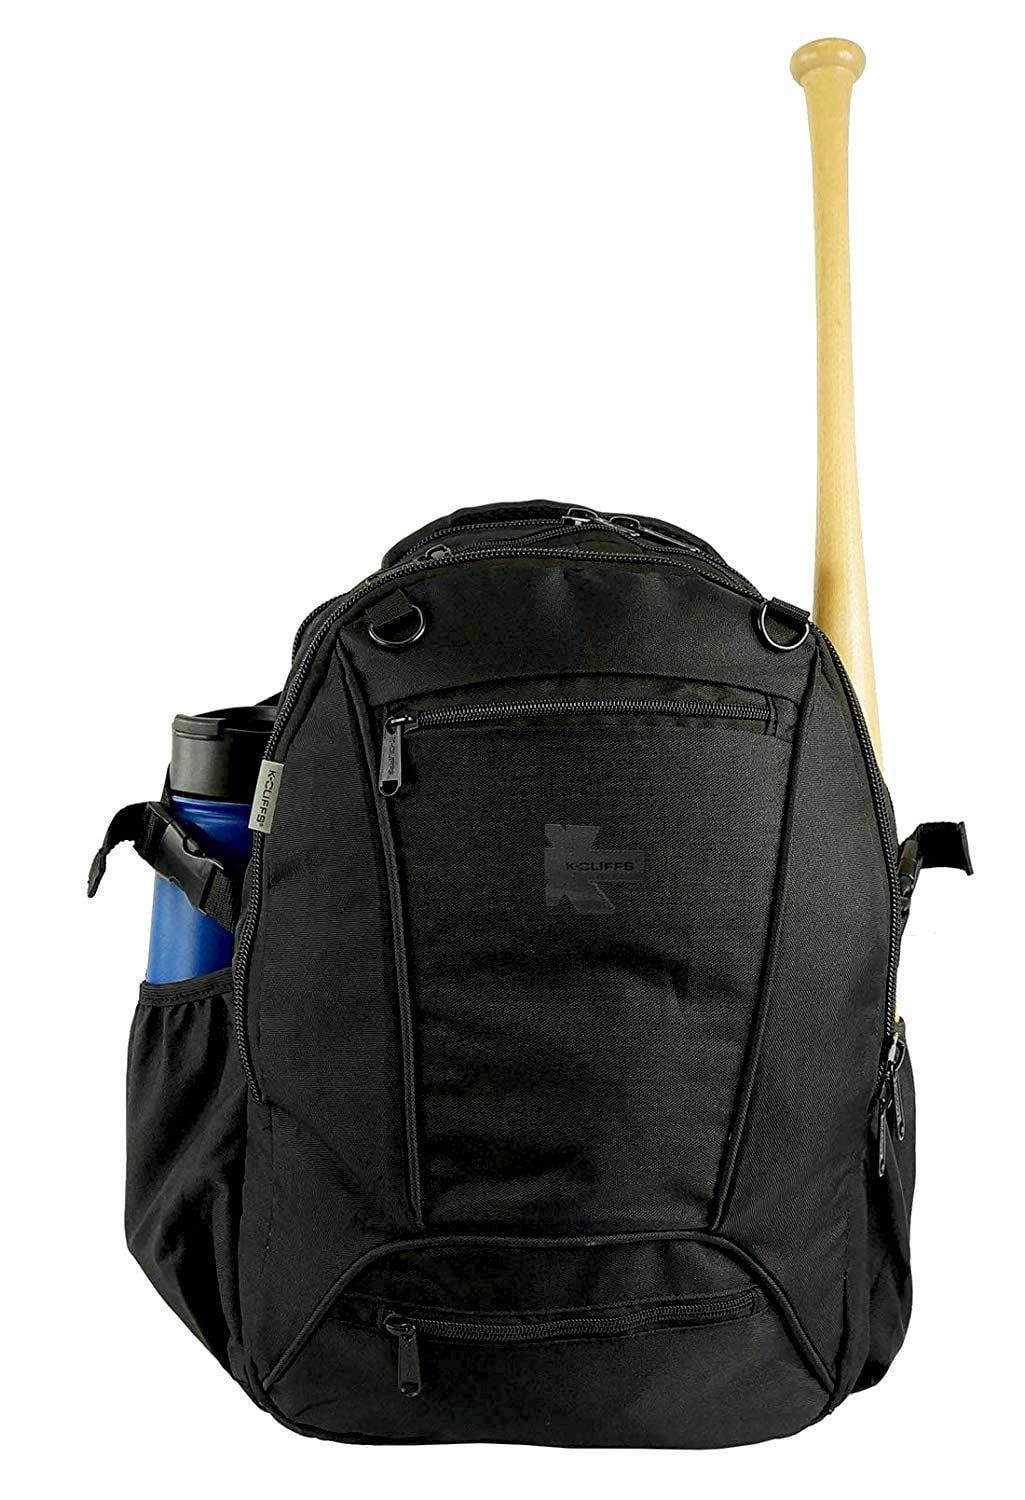 basketball backpack with ball holder